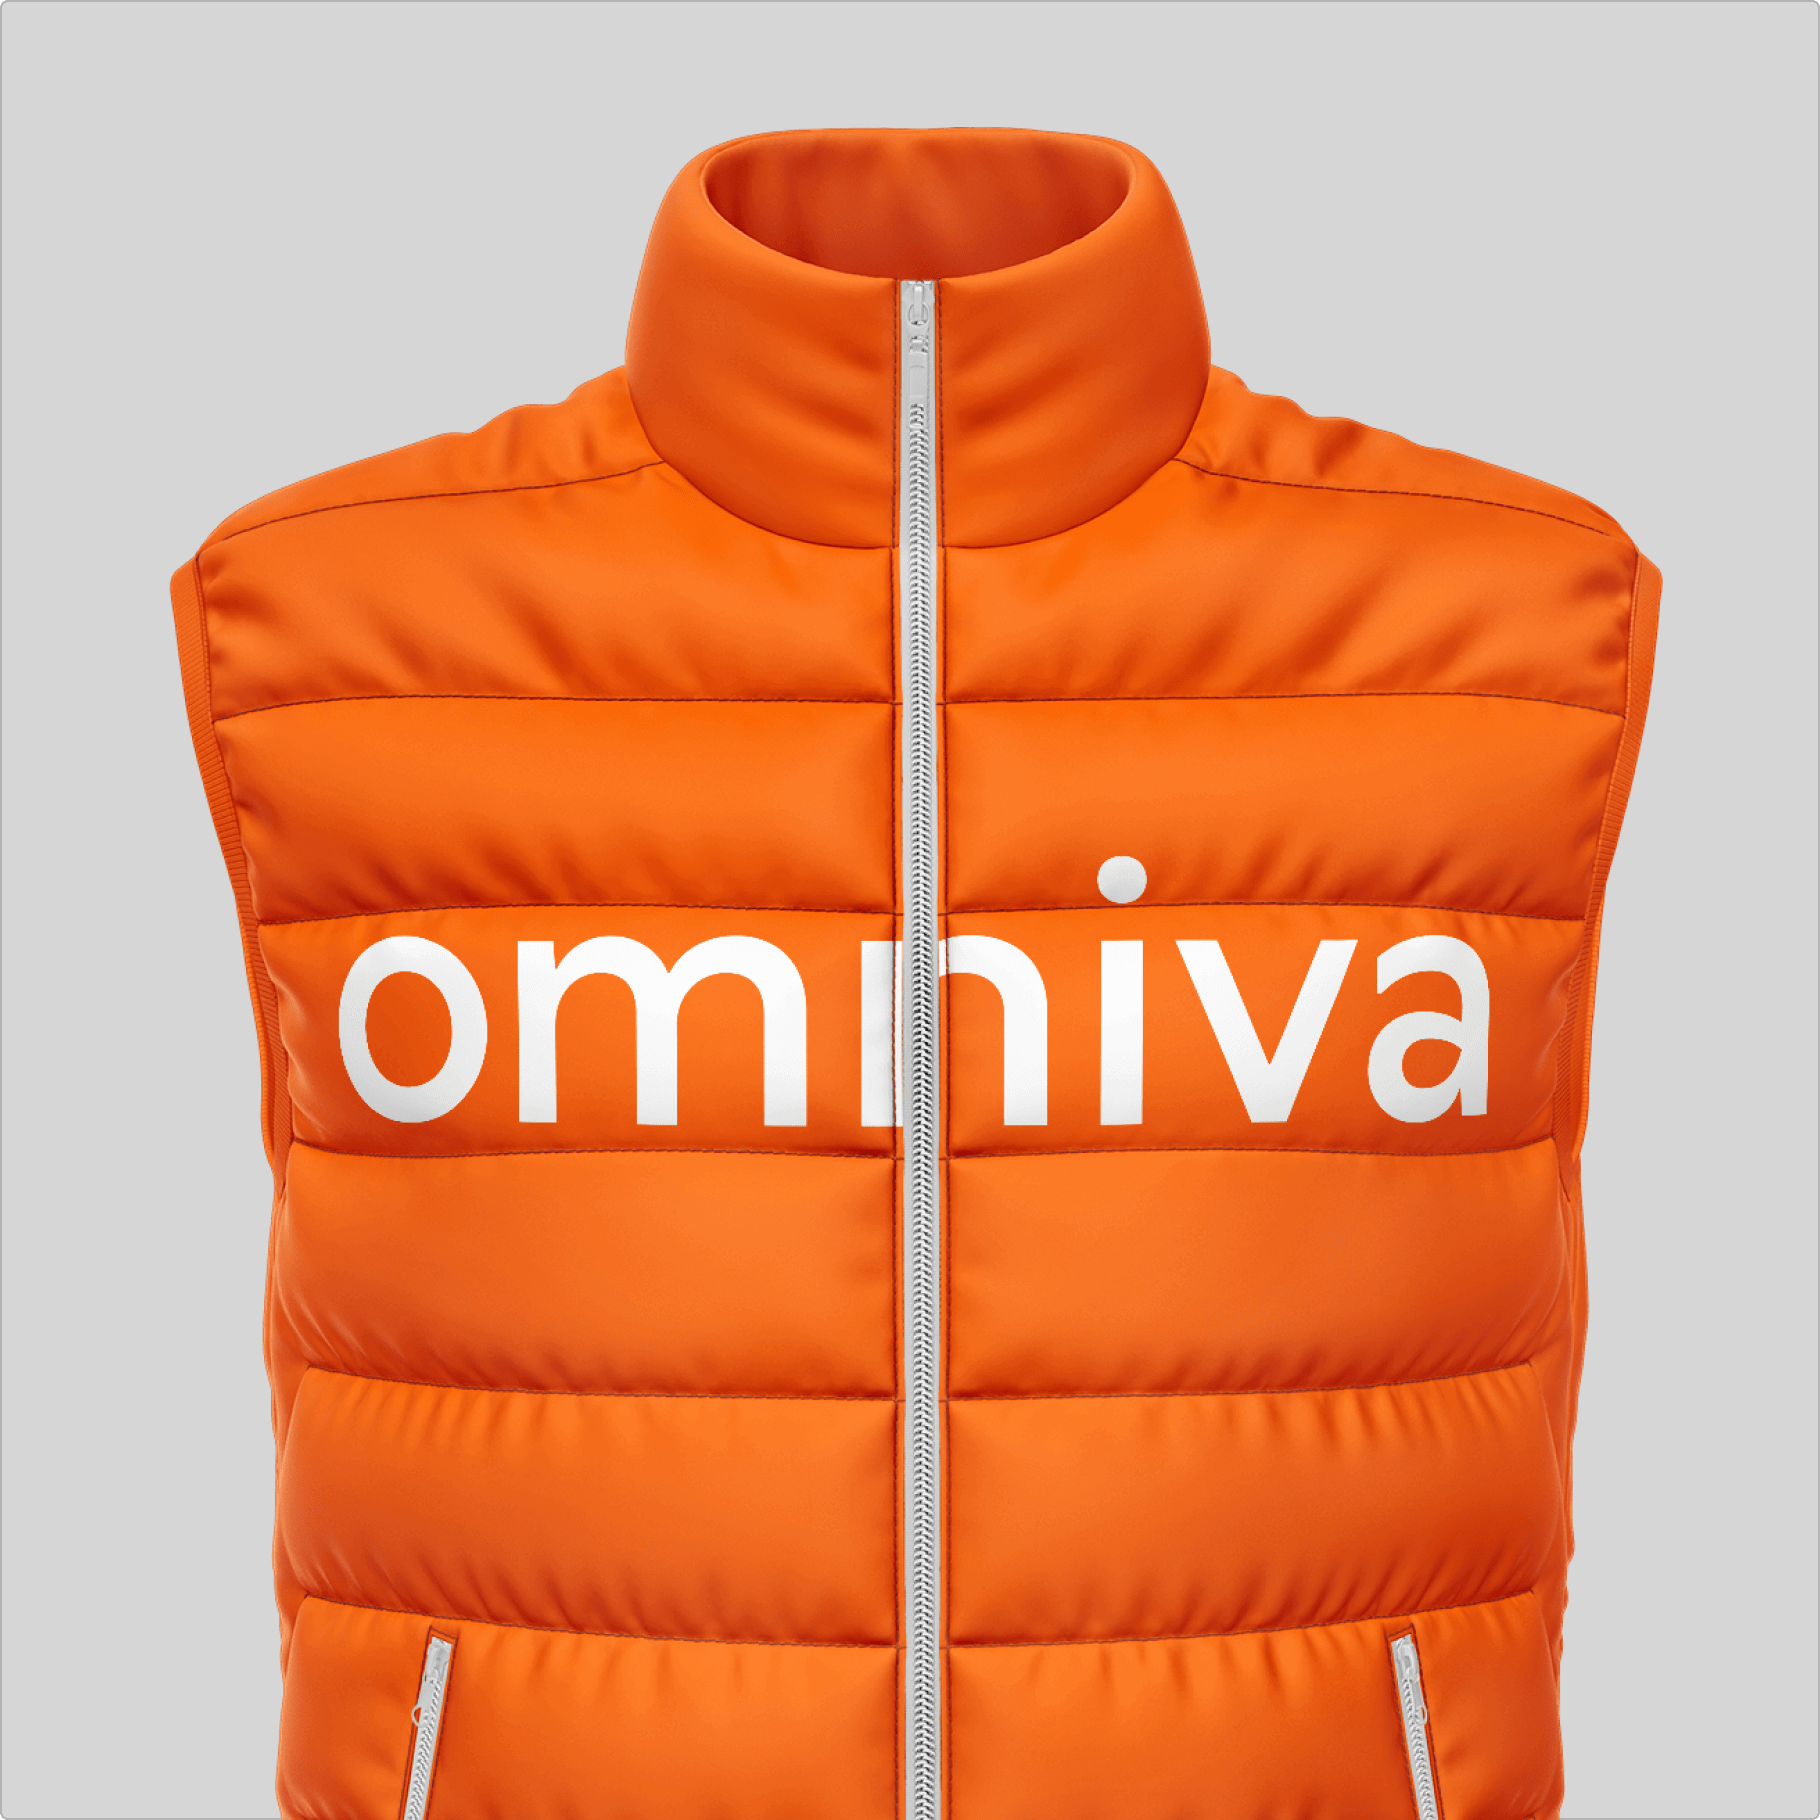 Omniva vest with wordmark